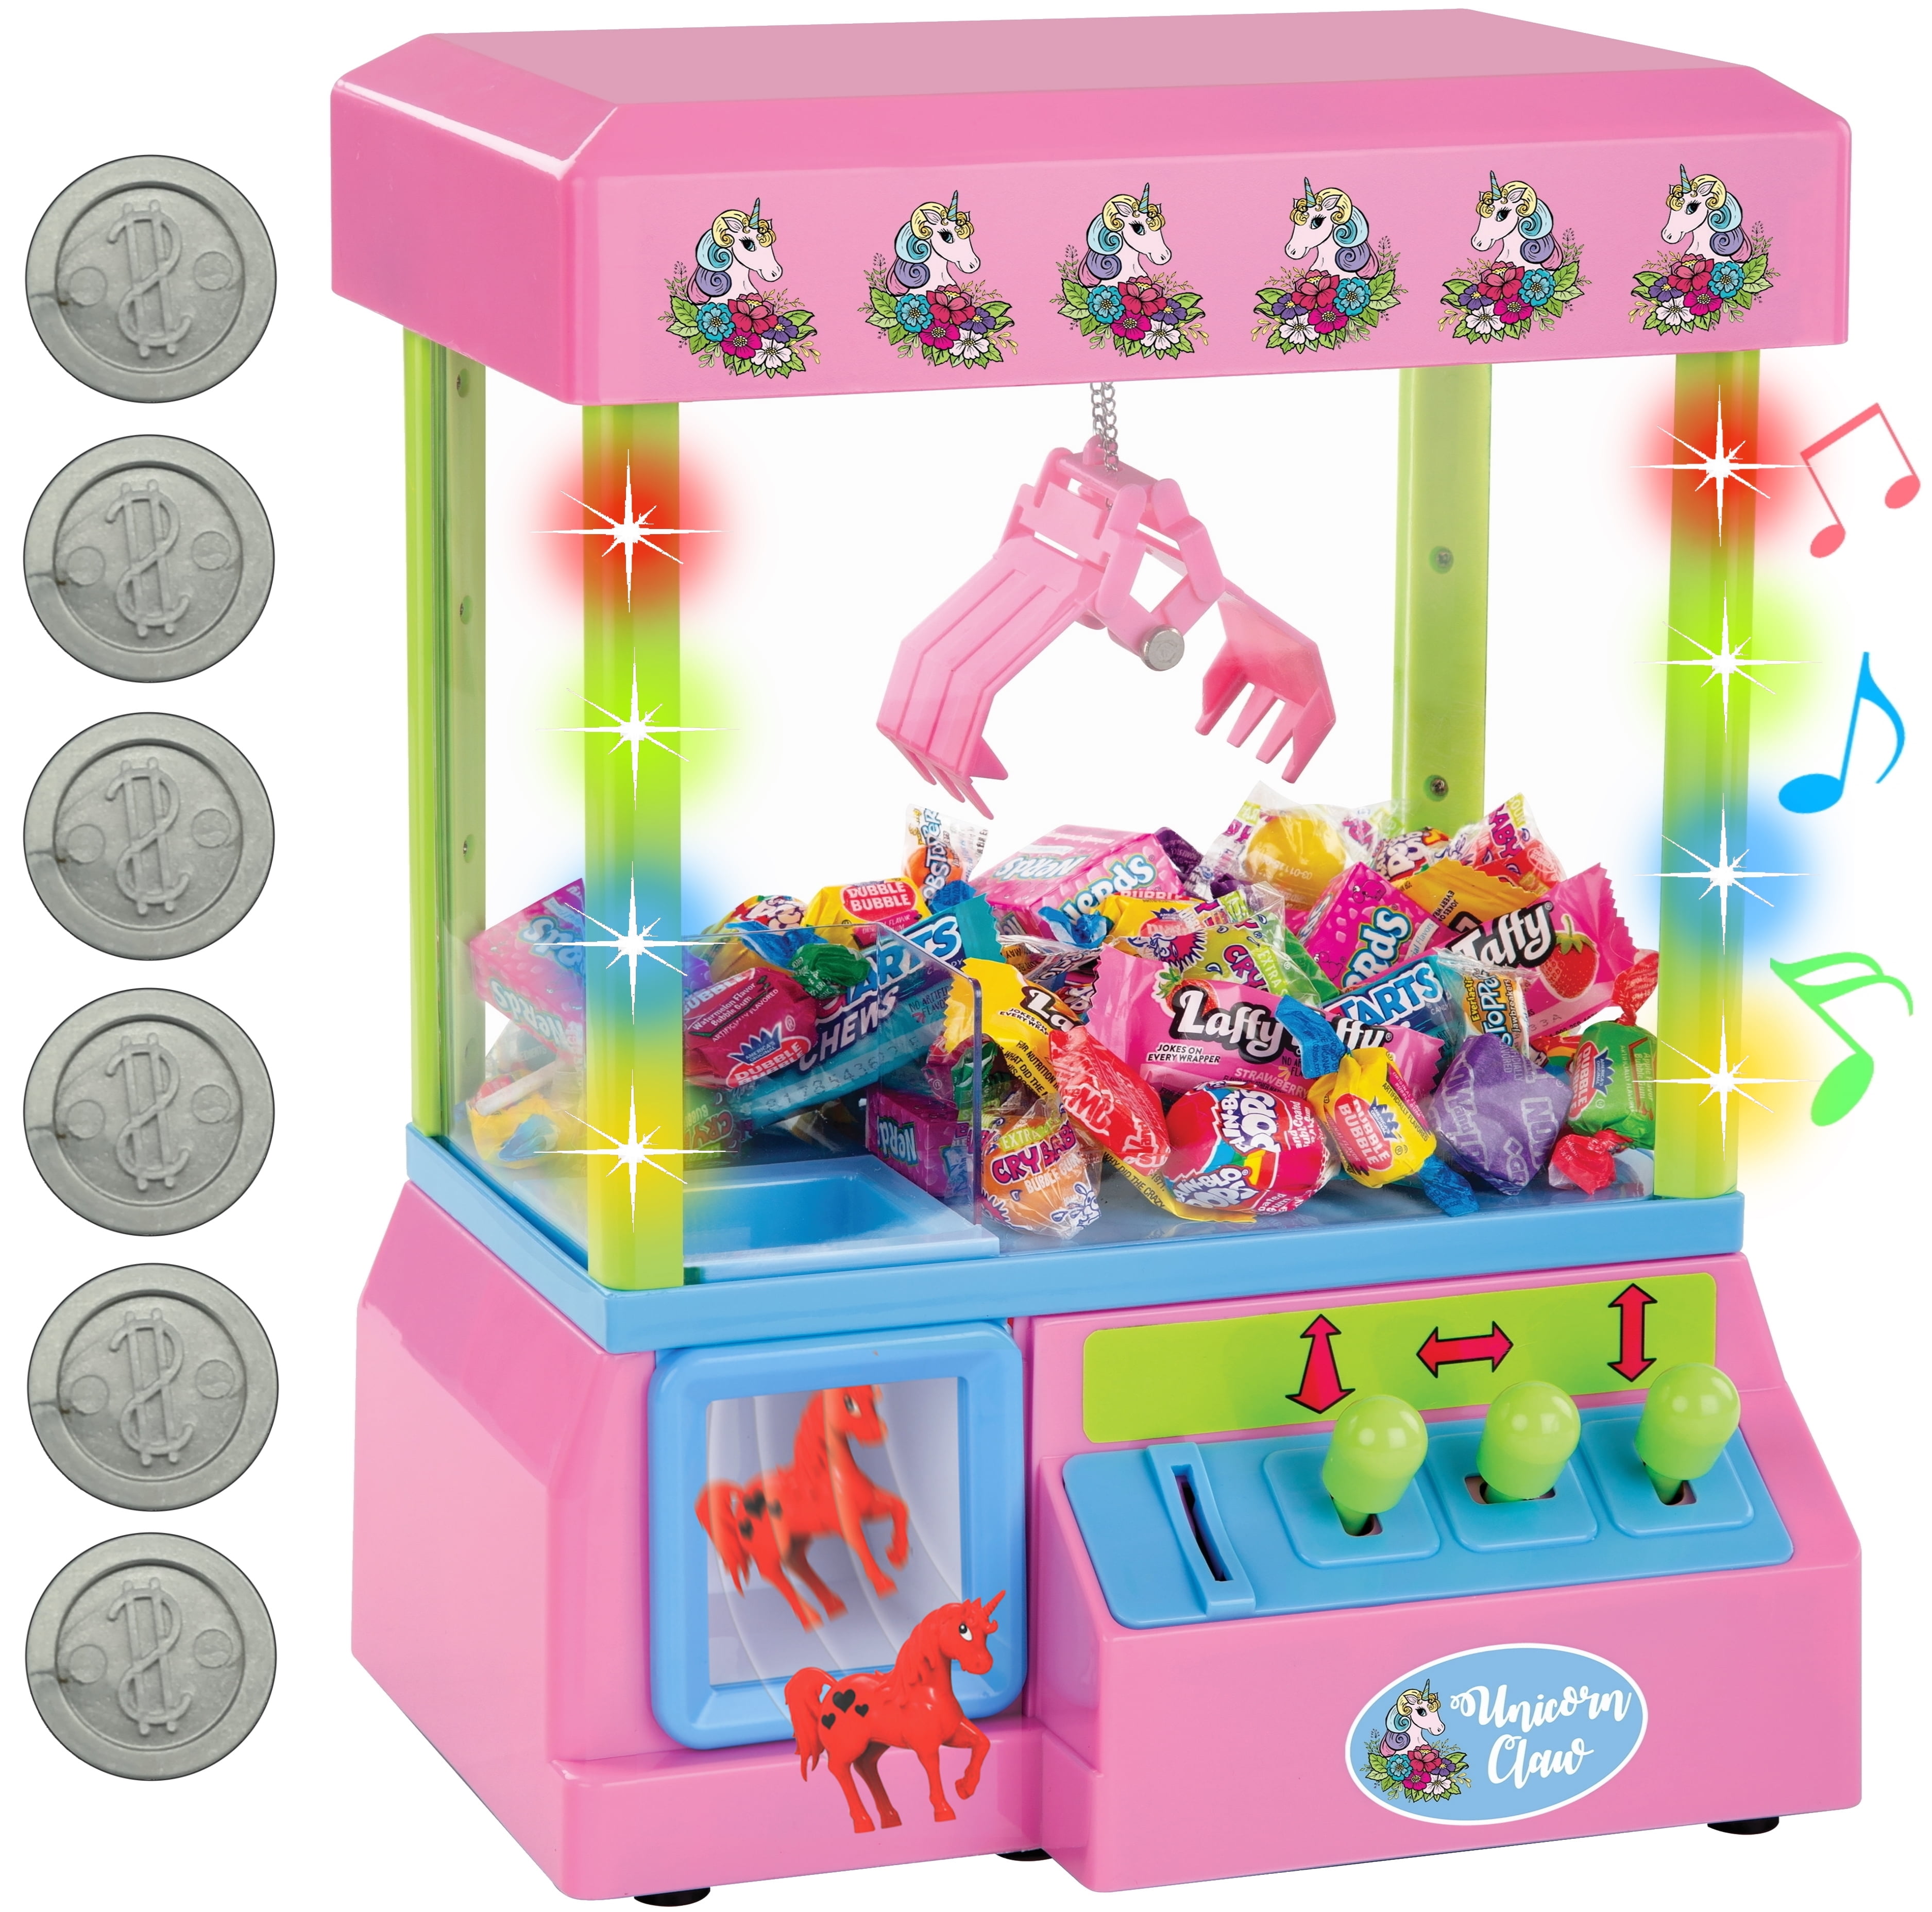 Kids Children Candy Lucky Ball Grabber Machine Toy Claw Crane Game Fairground Grabber Toy Gifts Blue